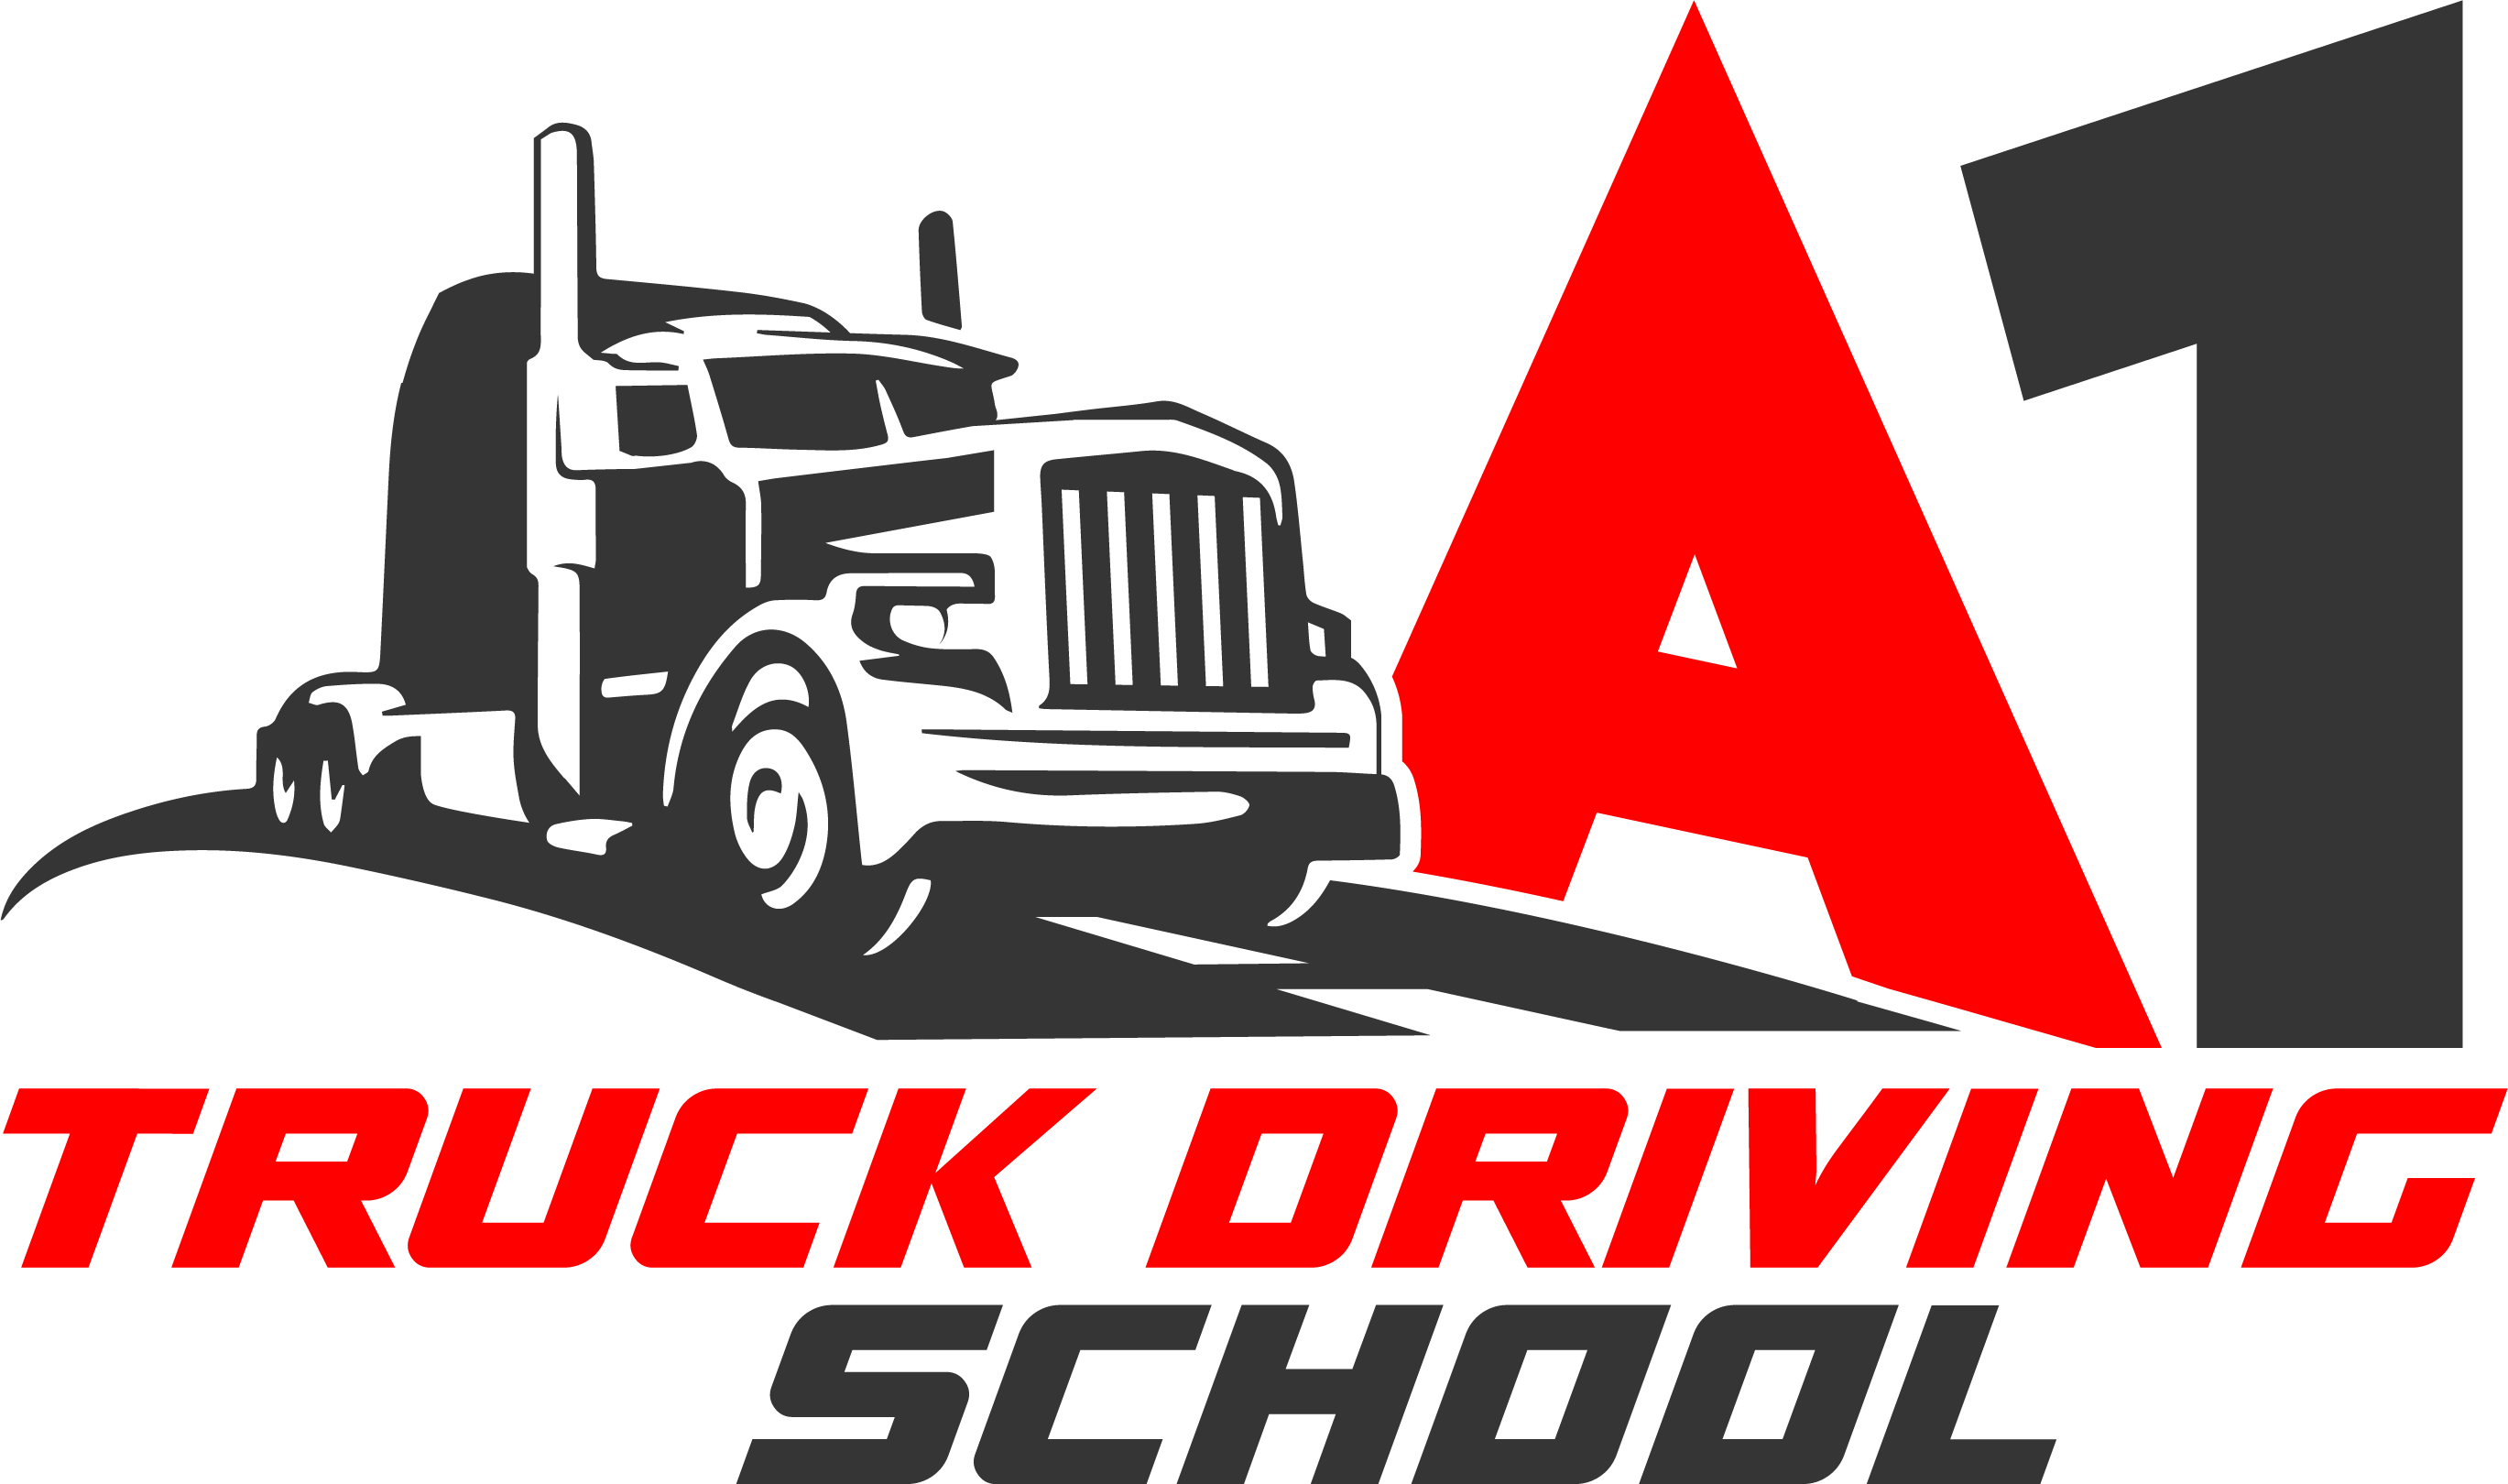 A1 Truck Driving School | TRUCK DRIVING SCHOOL SYDNEY | NSW | HR MR HC LR LICENCE